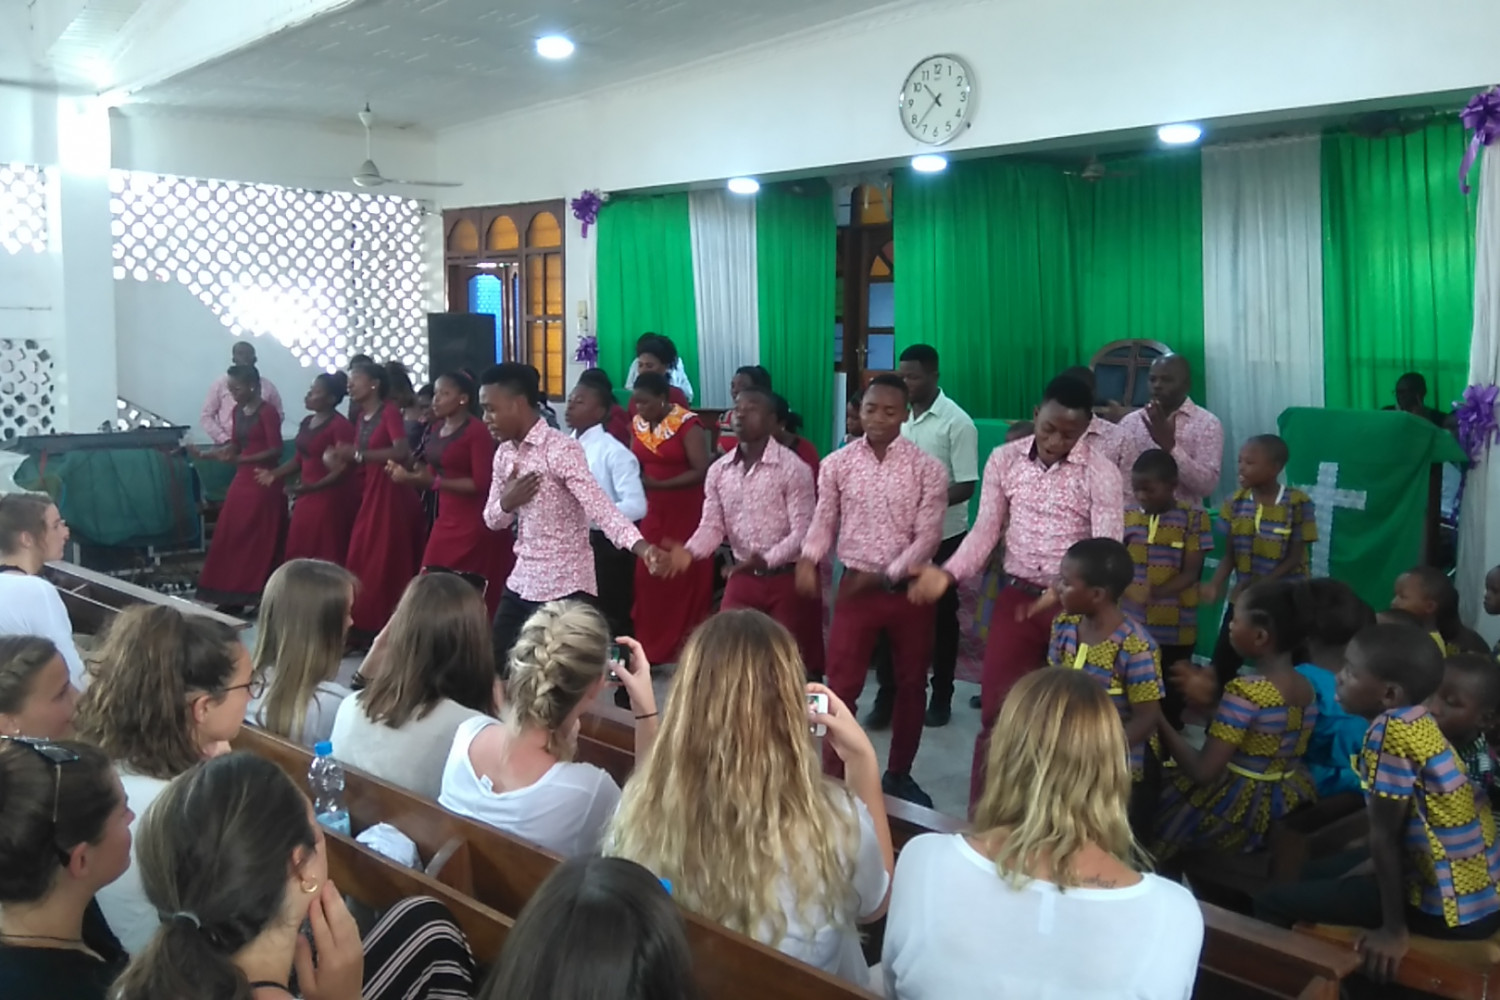 Moravian Church in Dar es Salaam, Tanzania.